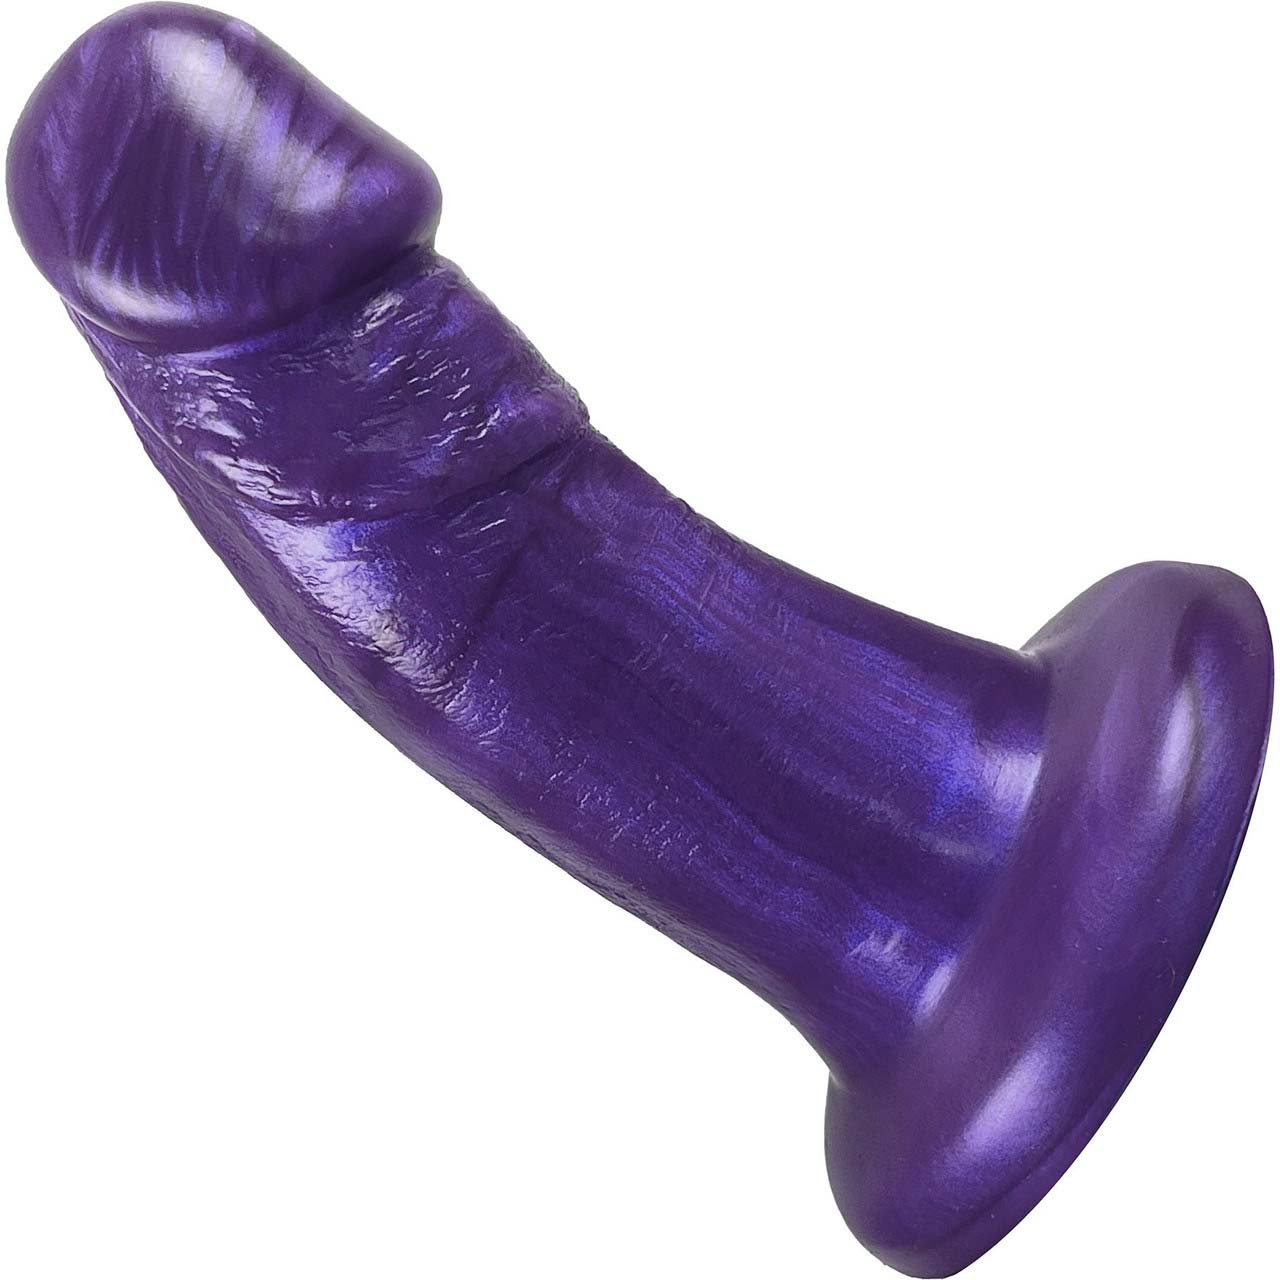 The right side of the purple Medium Realistic Bent Dildo.